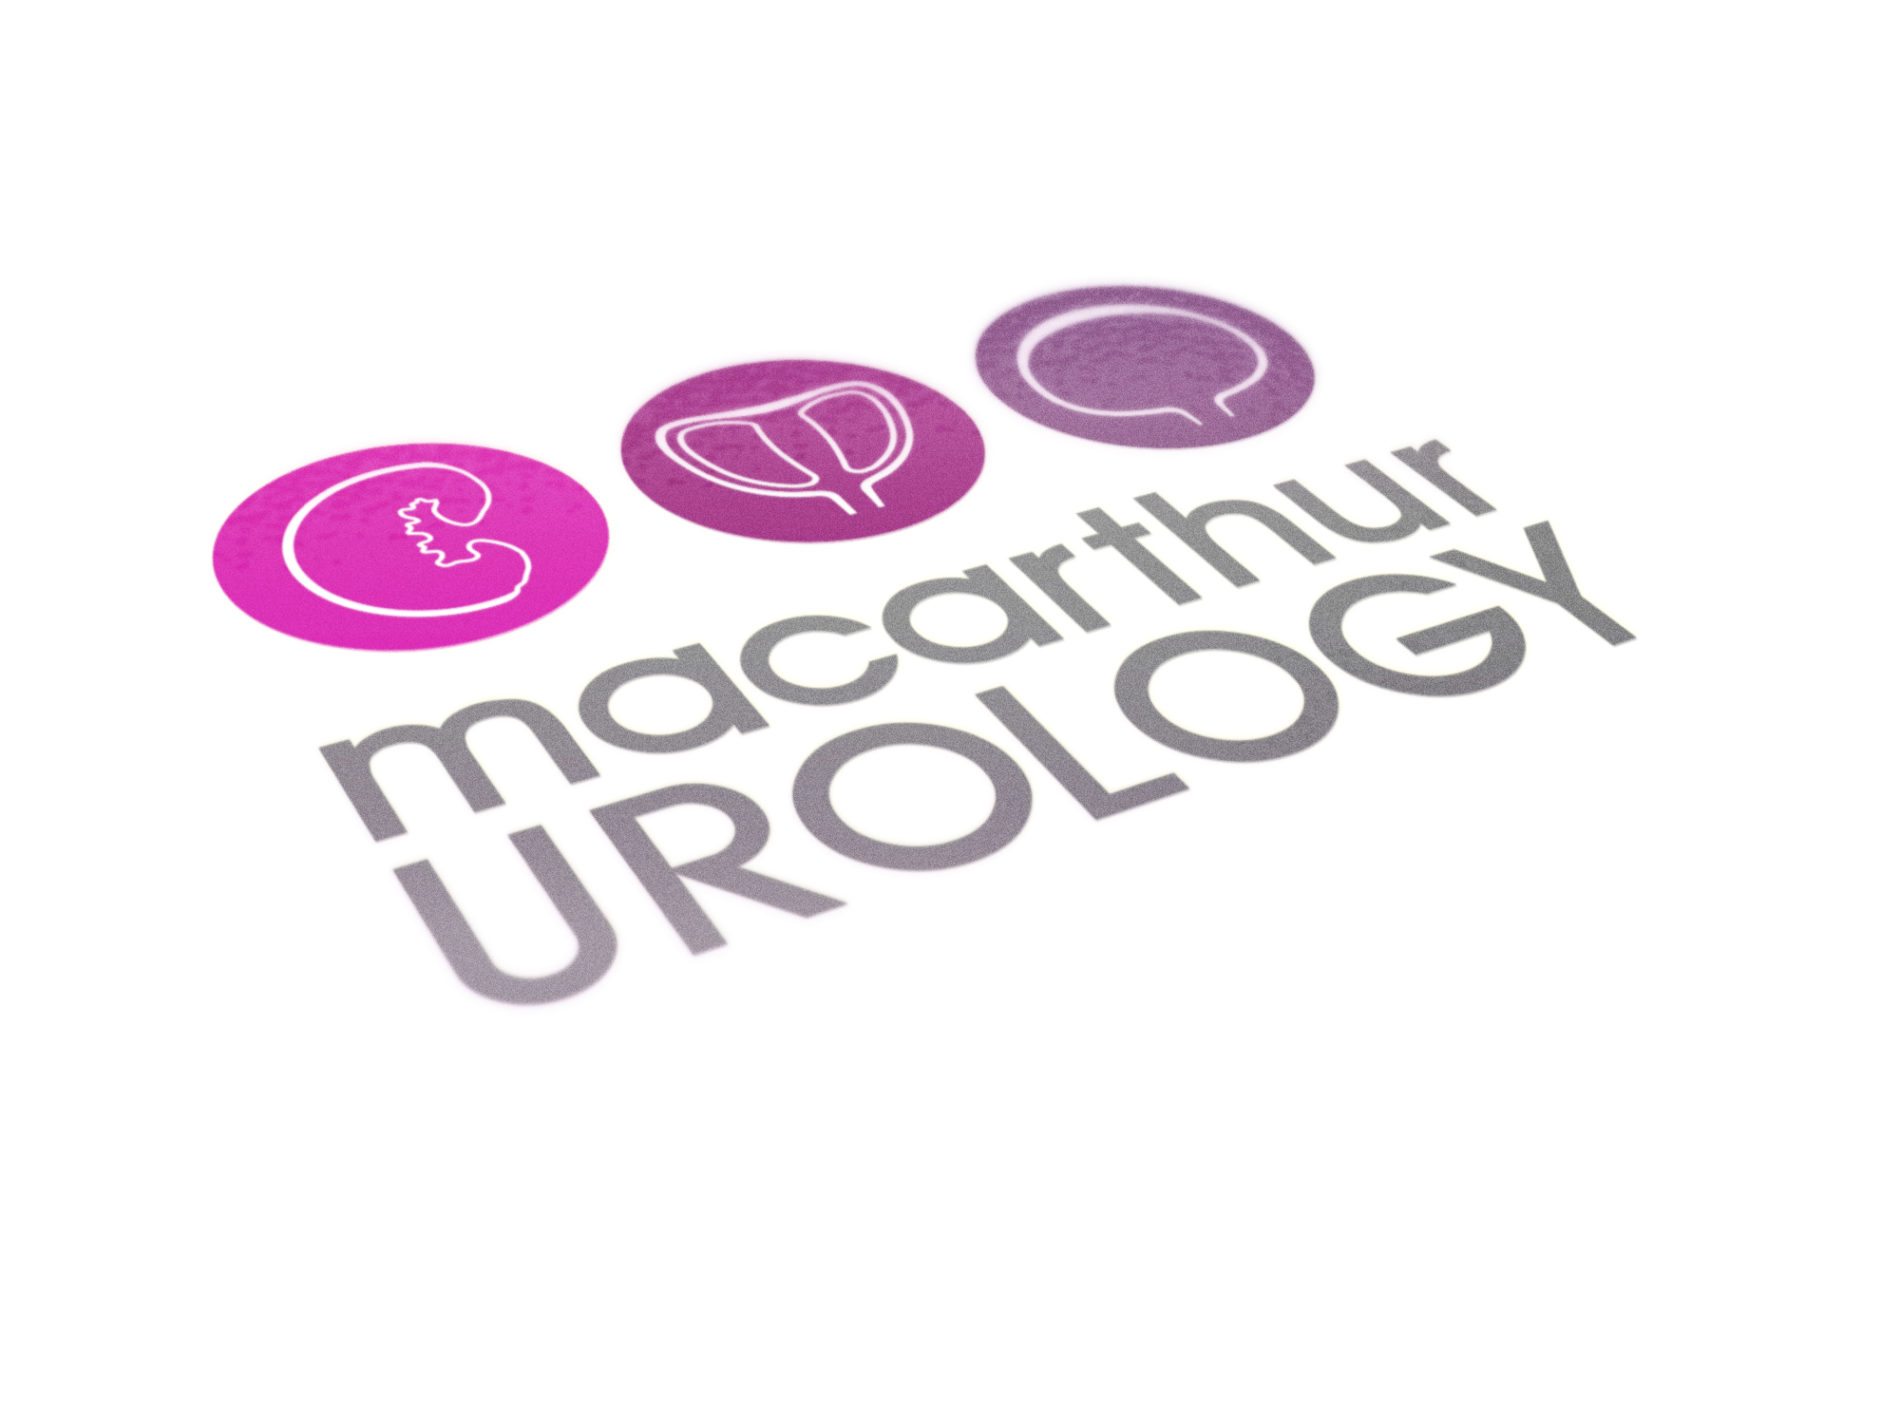 Macarthur Urology - Logo Design - Cronulla Web Design